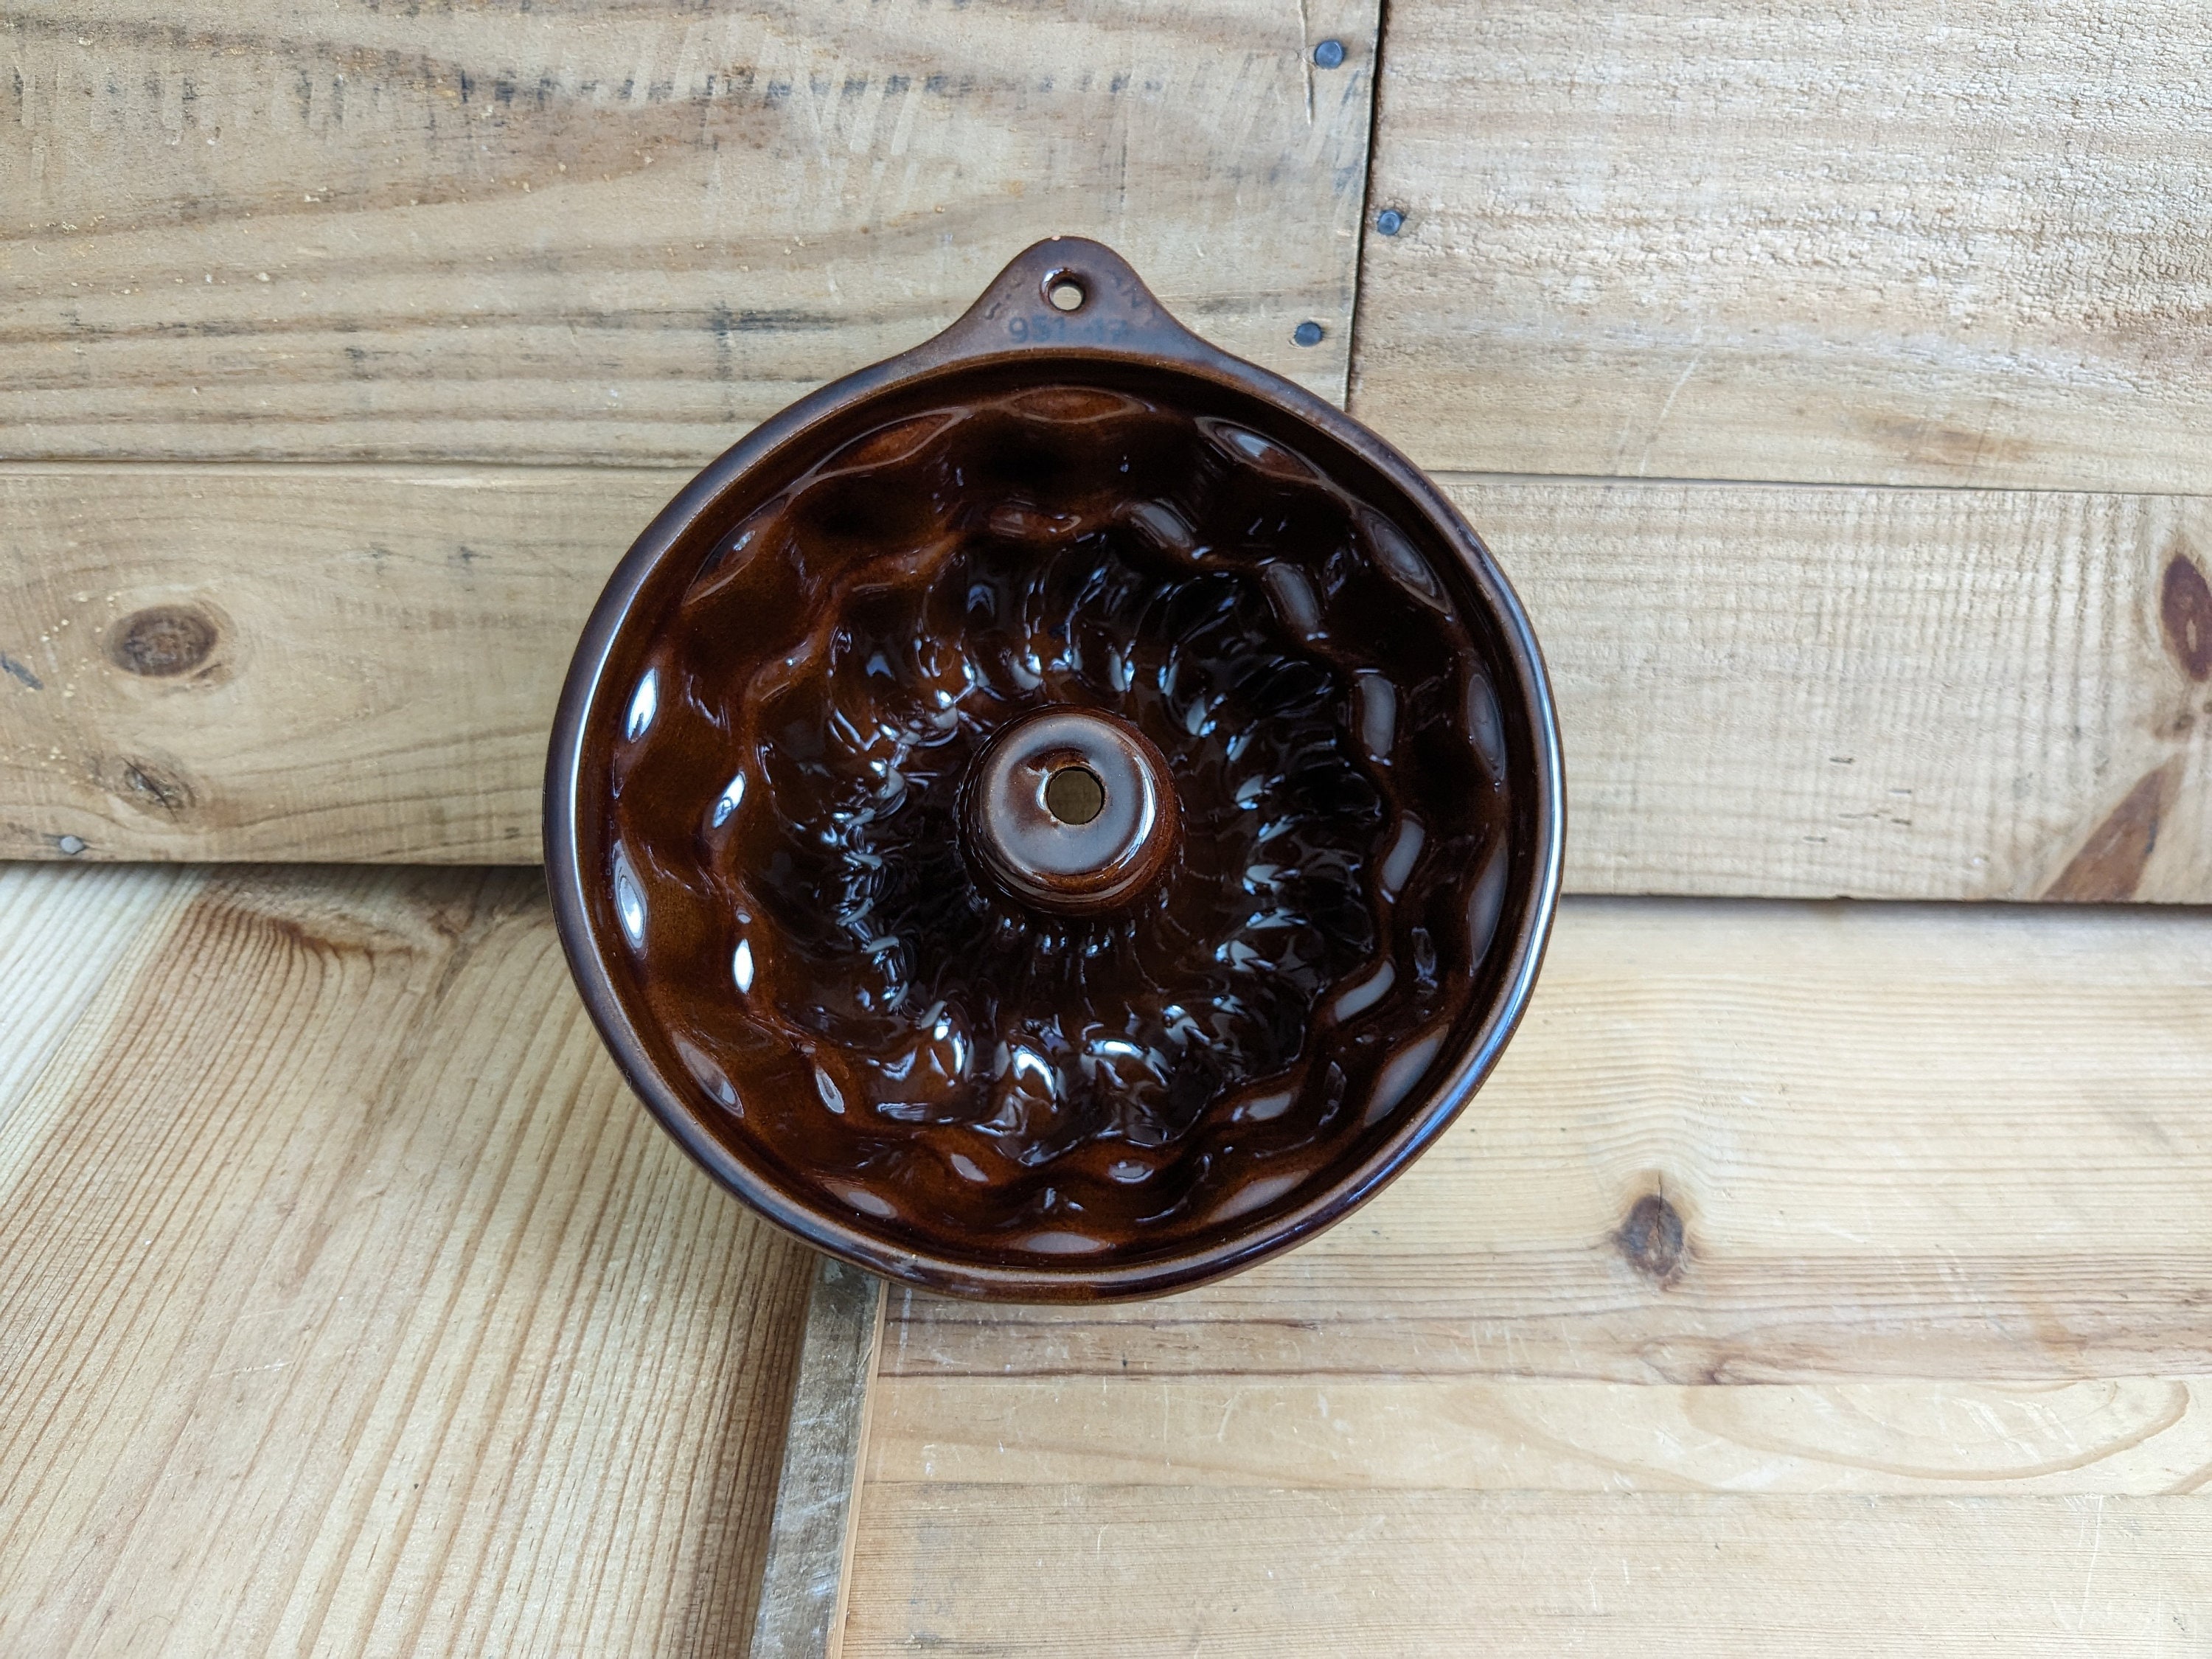 Glazed Redware Pottery Bundt Cake Pan Primitive Vintage - 8 3/4 Diameter